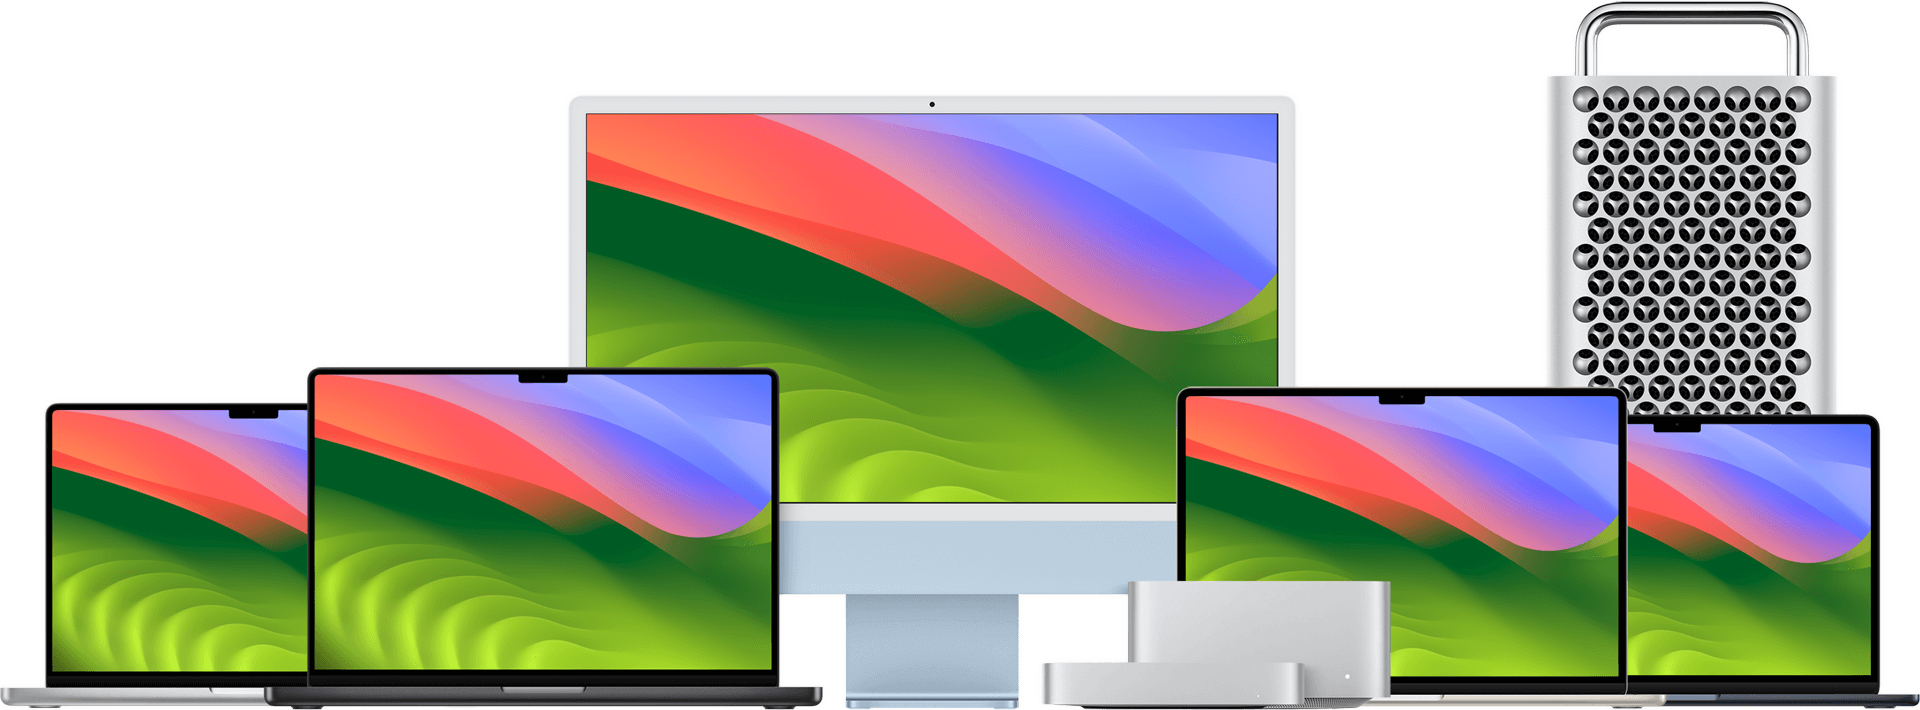 Apple announces new M3 chips and M3 MacBook Pro laptop